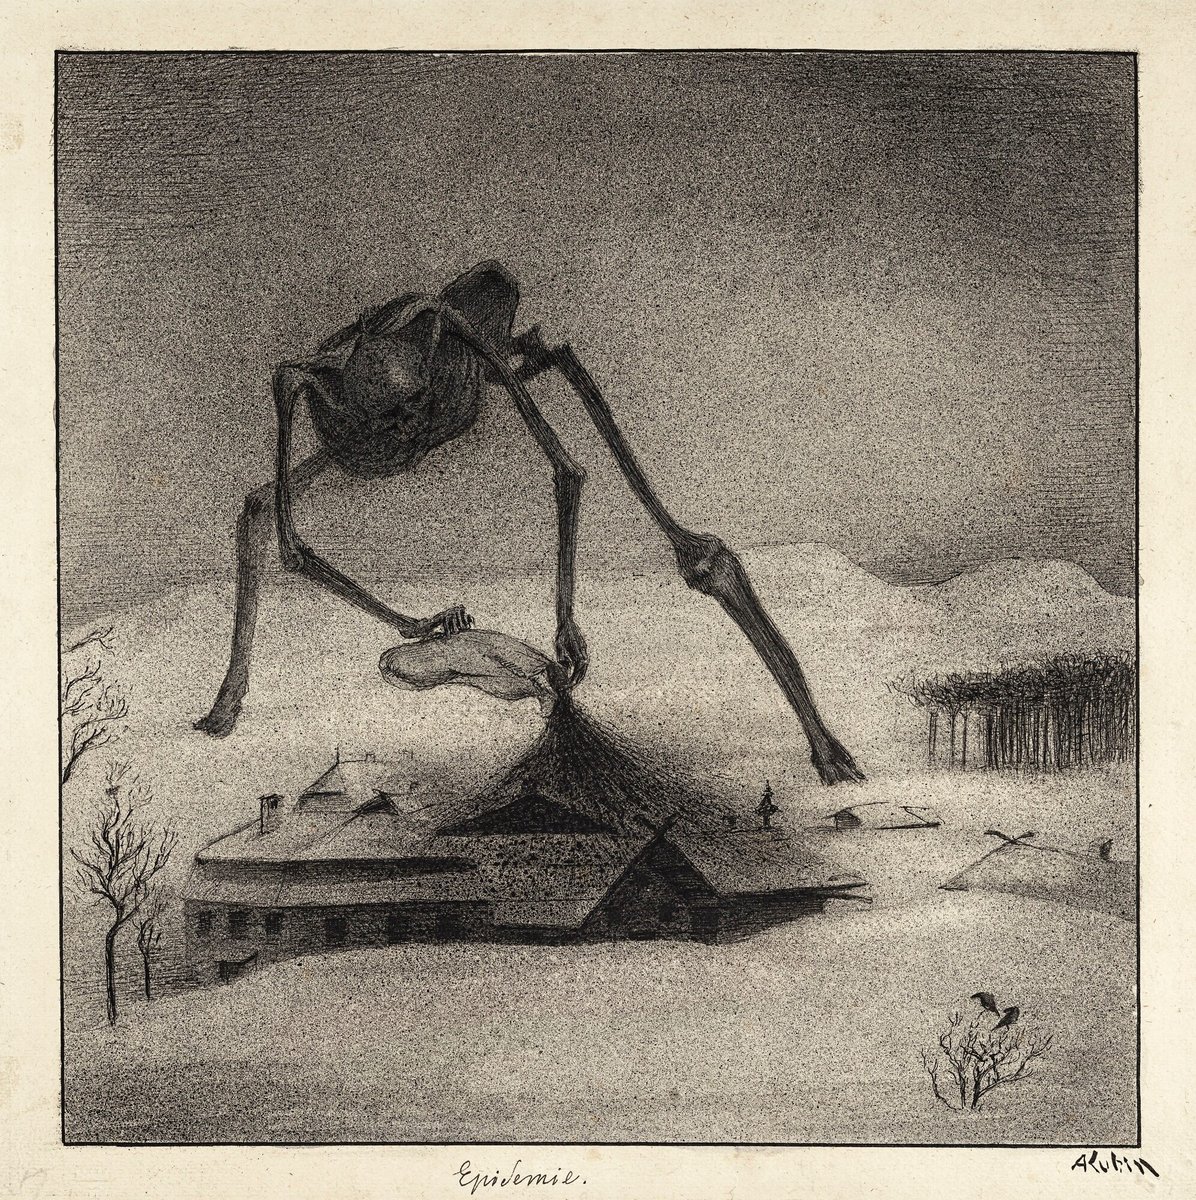 Epidemic, 1901/02, Alfred Kubin